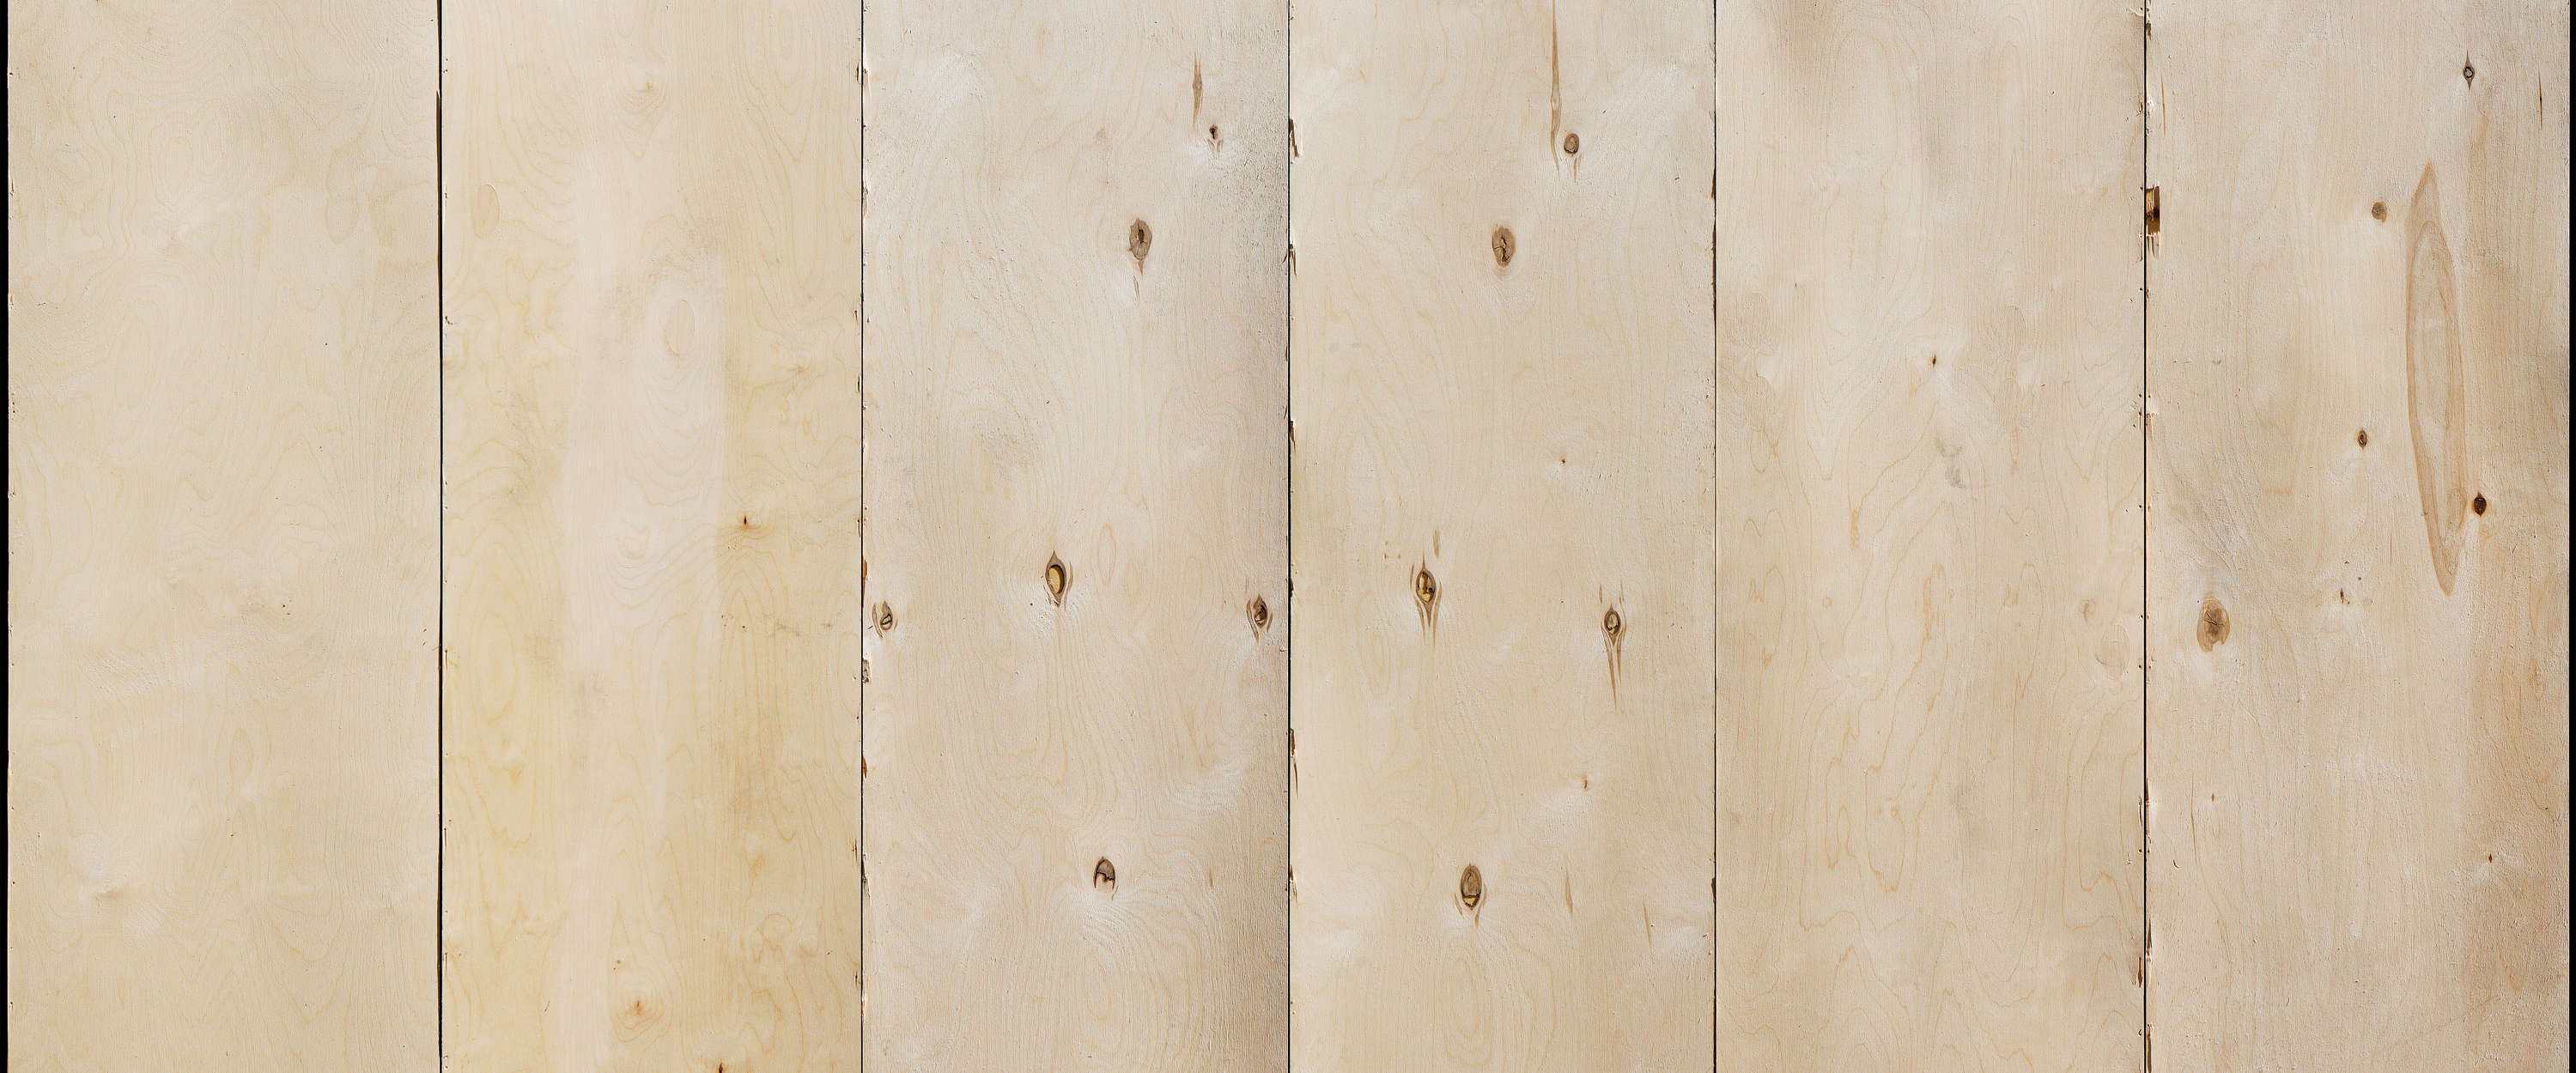             Holzoptik Fototapete Planken mit Maserung
        